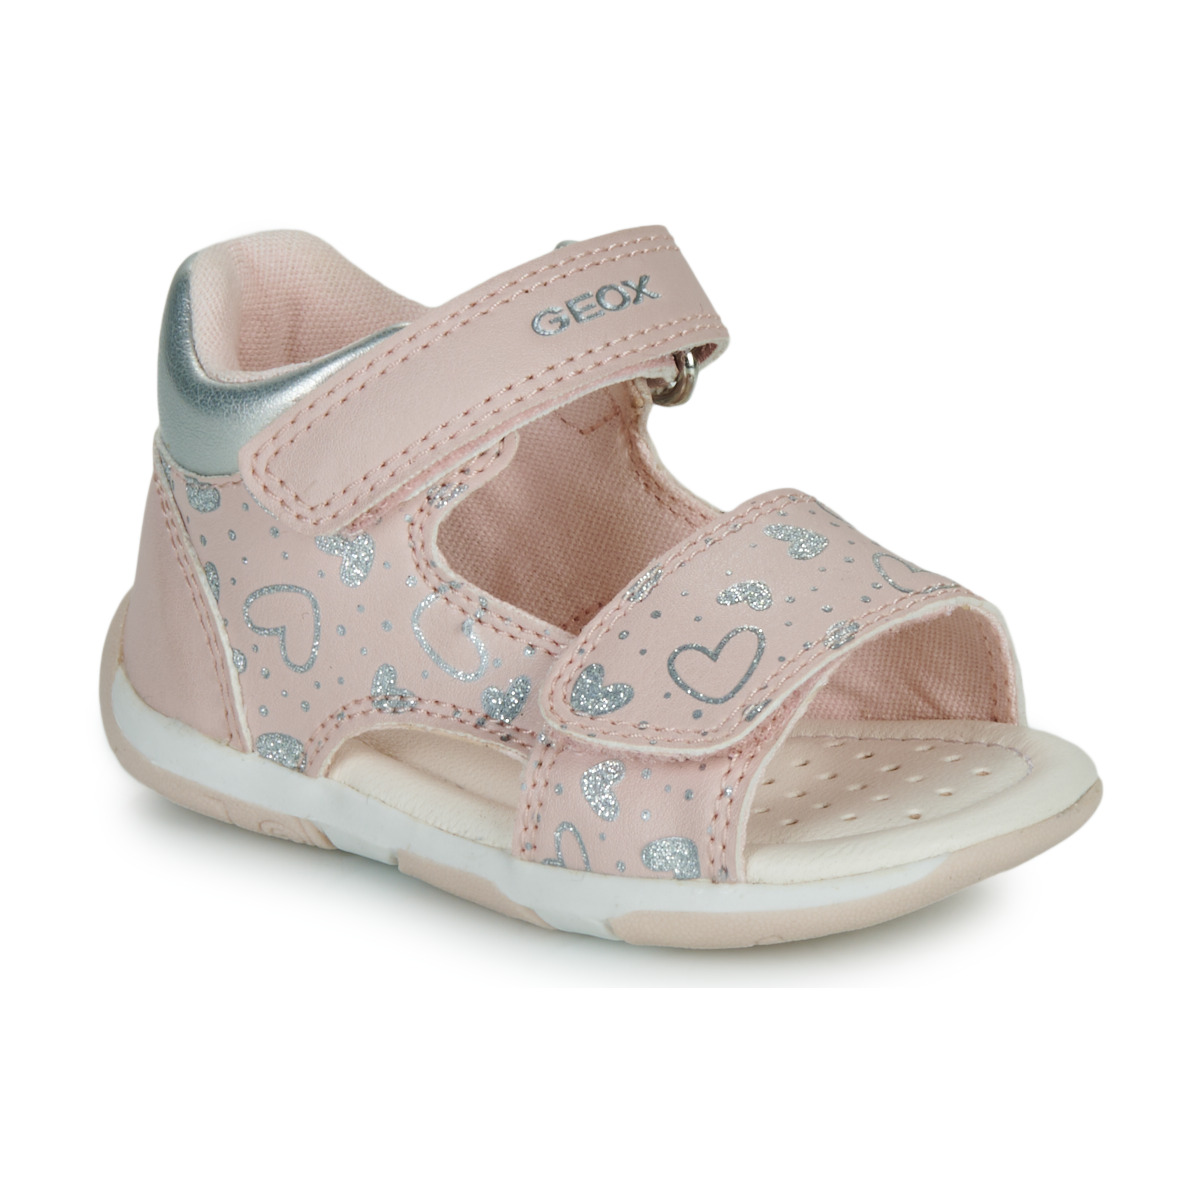 Chaussures Fille Sandales et Nu-pieds Geox B SANDAL TAPUZ GIRL Rose / Argenté